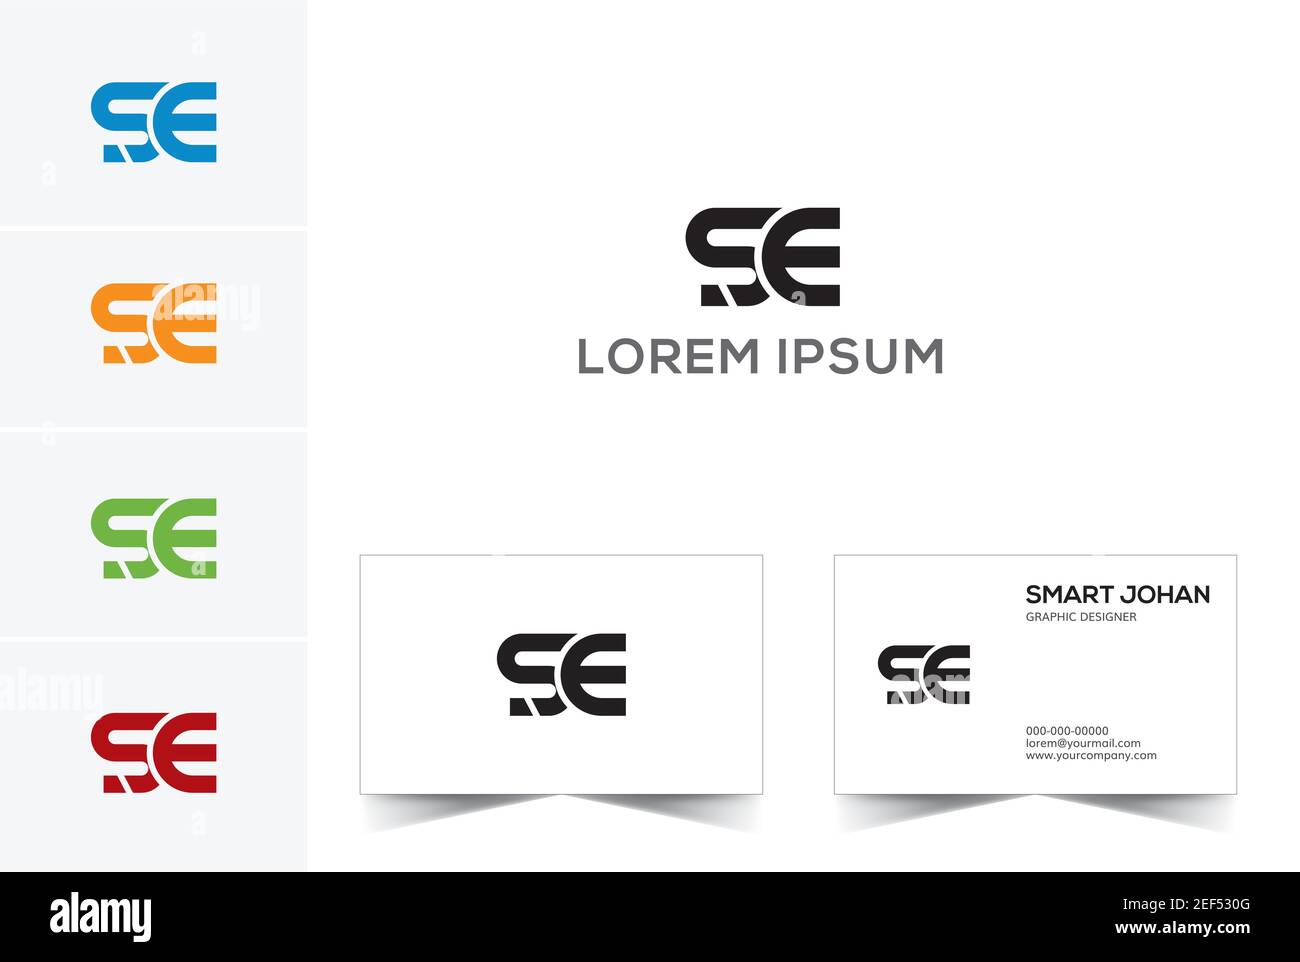 SE logo and icon Stock Vector